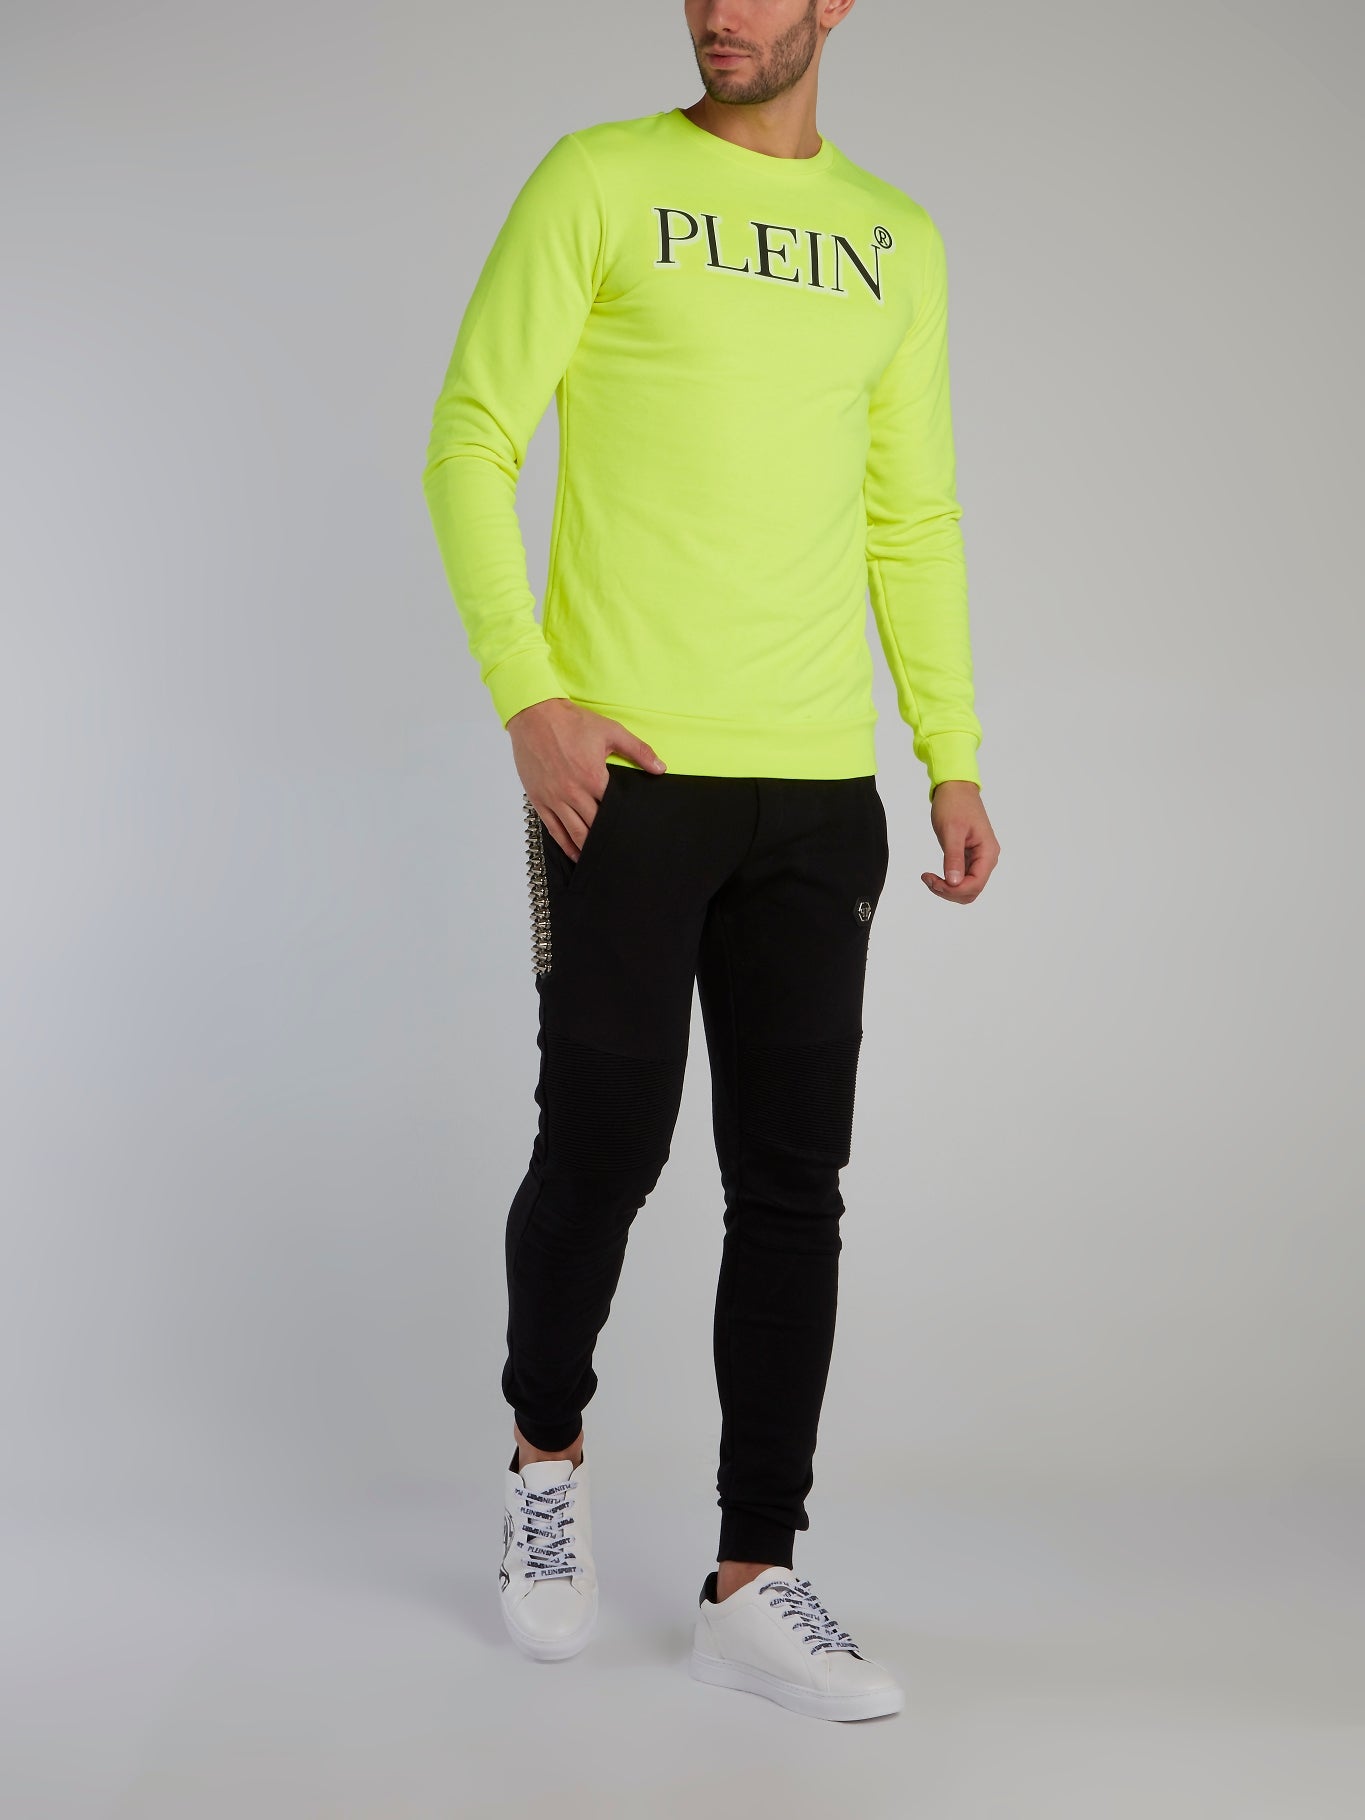 Neon Yellow Statement Crewneck Sweatshirt